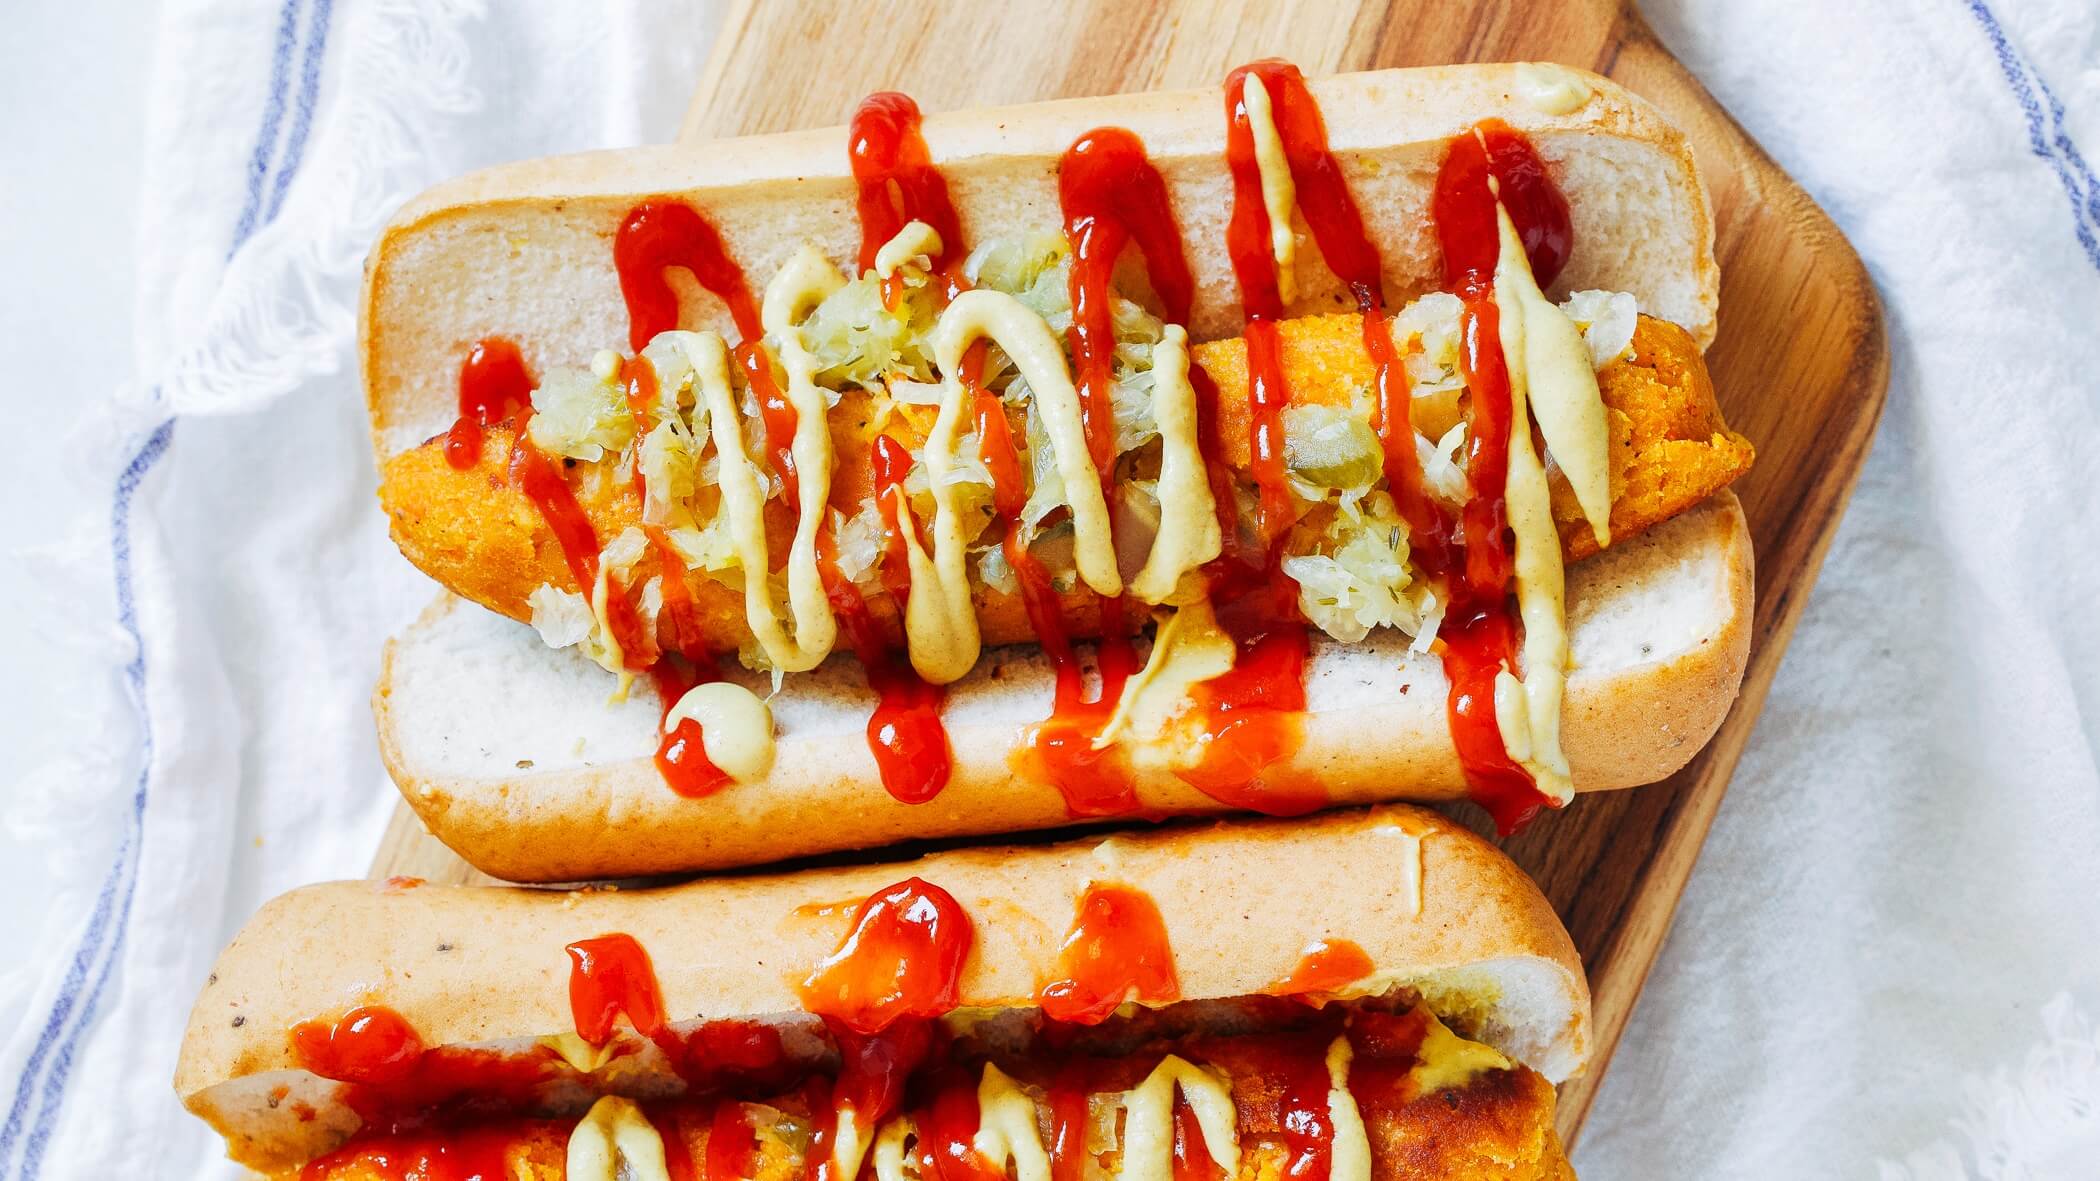 DIY Vegan and Gluten-Free Lentil Hot Dogs